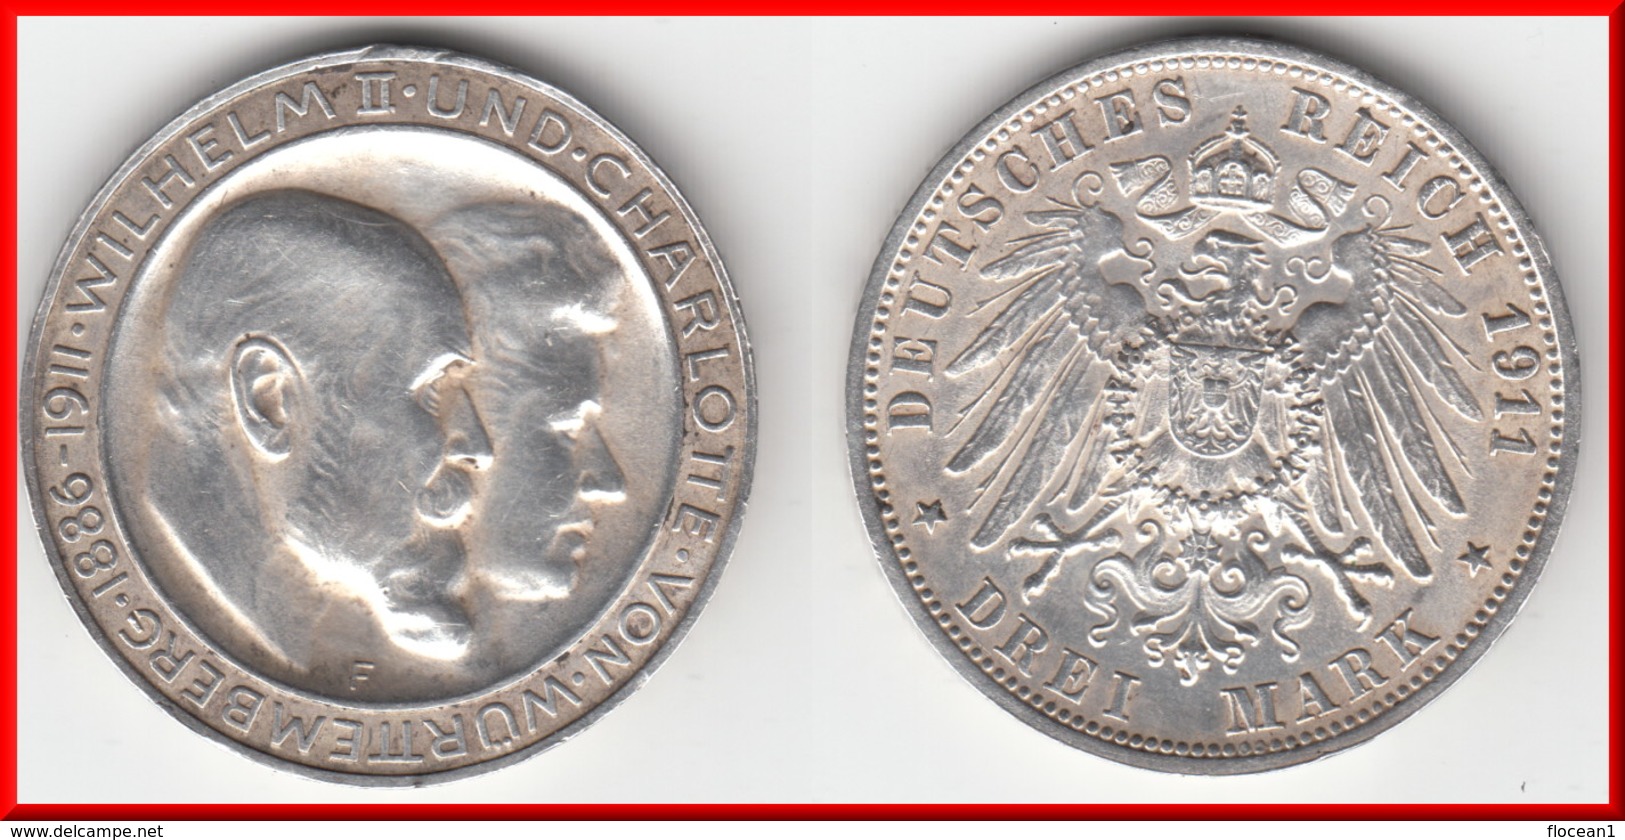 QUALITY *** WURTTEMBERG - ALLEMAGNE - GERMANY - 3 MARK 1911 F WILHELM II UND CHARLOTTE - SILVER *** ACHAT IMMEDIAT !!! - 2, 3 & 5 Mark Silver